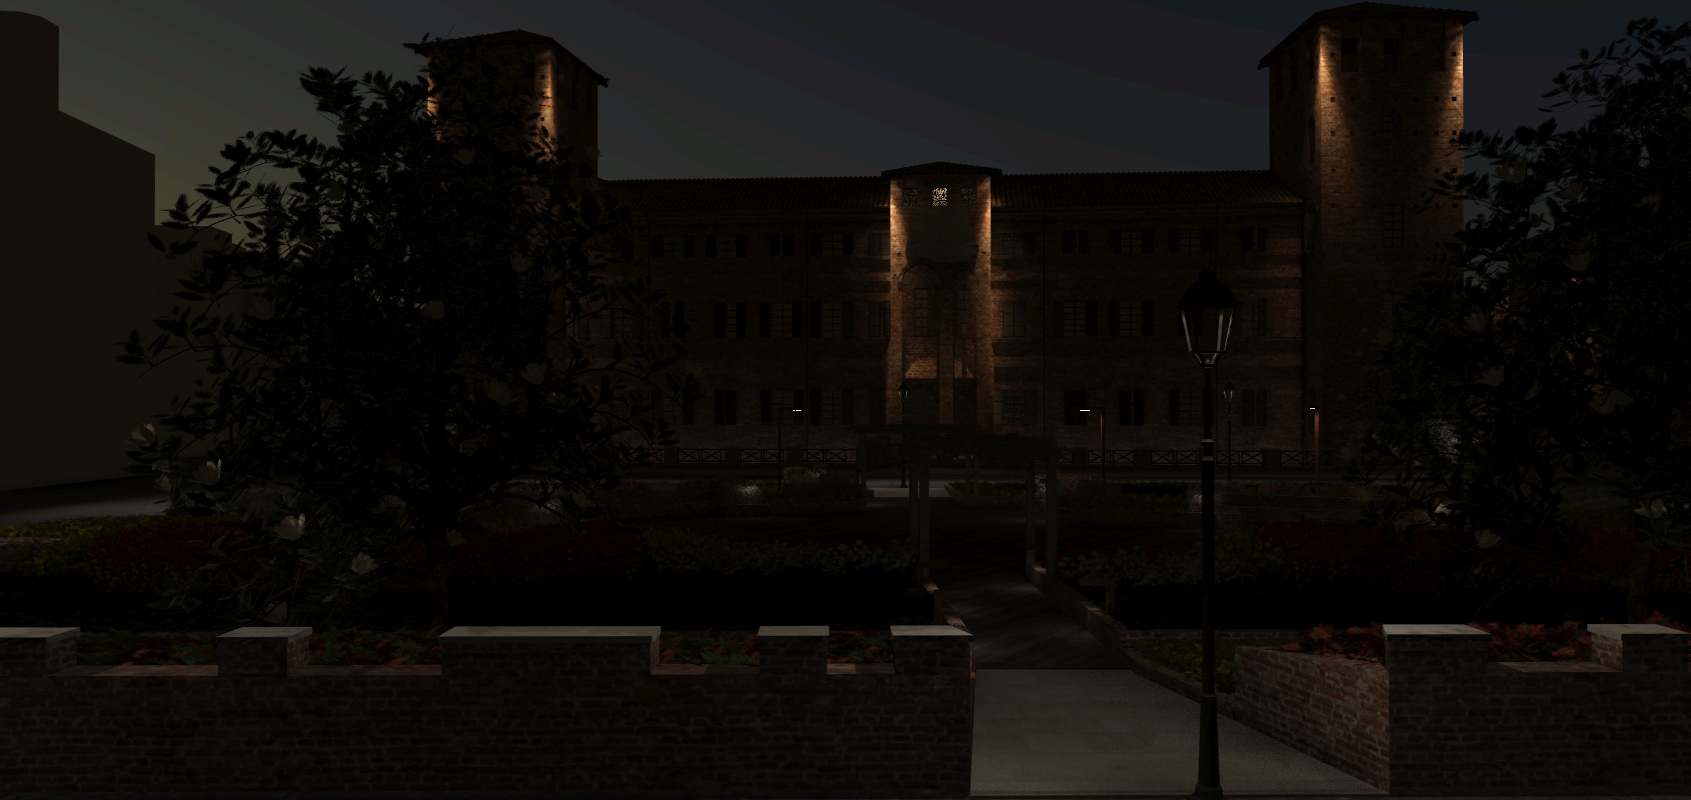 Permalink to: Vercelli – Castello – Simulazione notturna